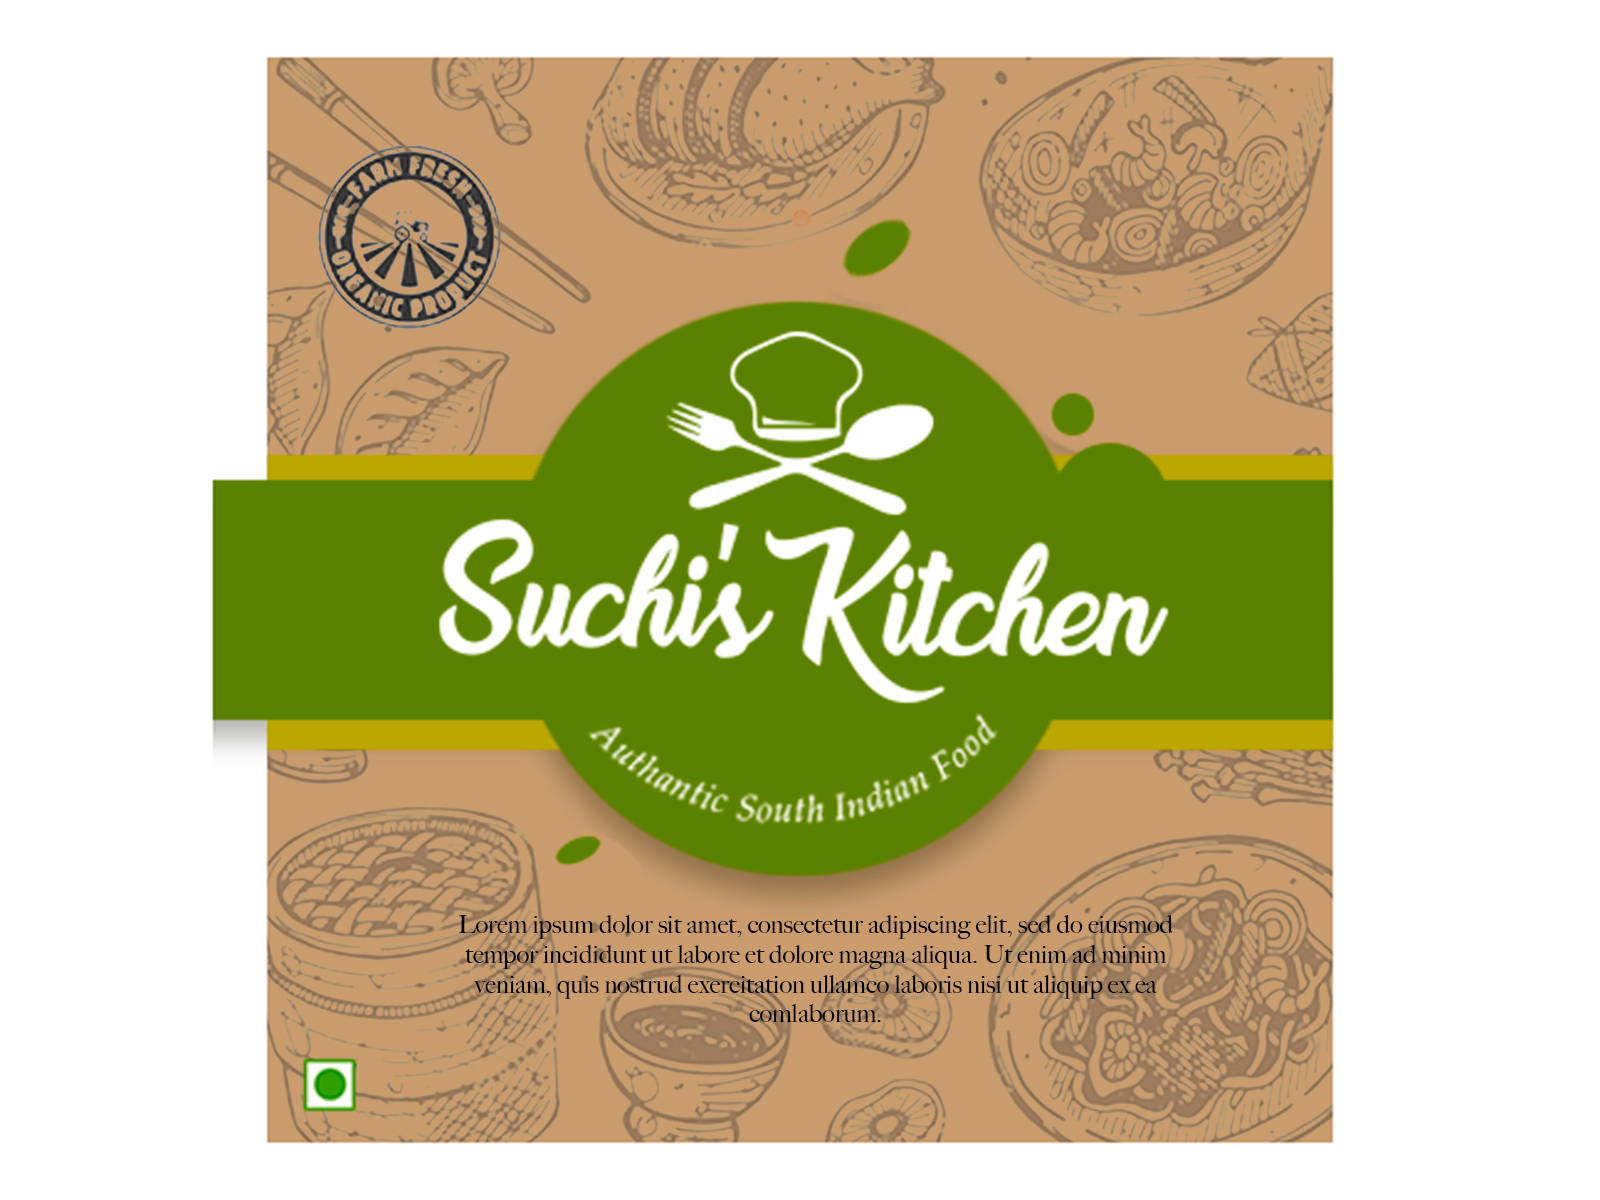 south indian food logo